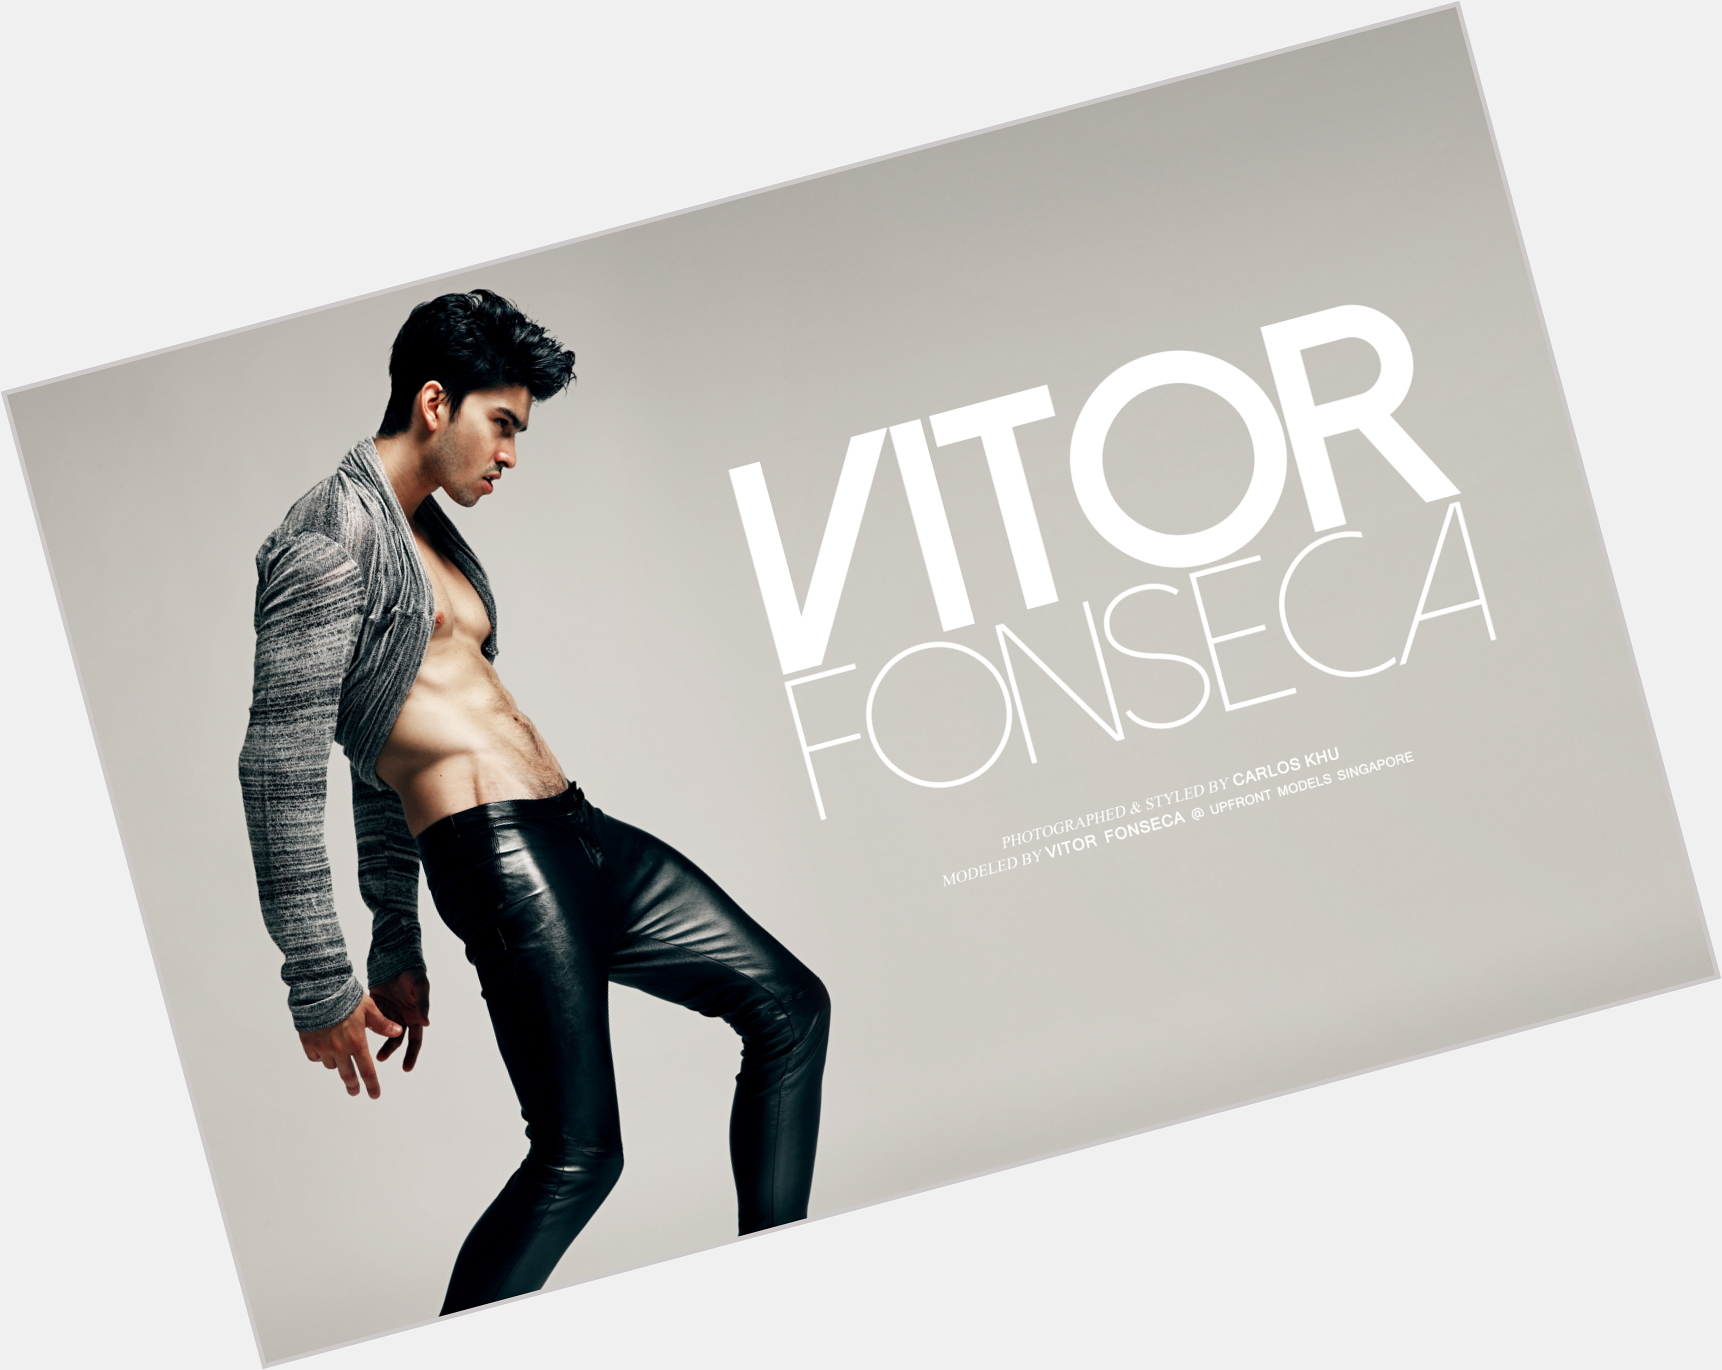 Vitor Fonseca Athletic body,  dark brown hair & hairstyles